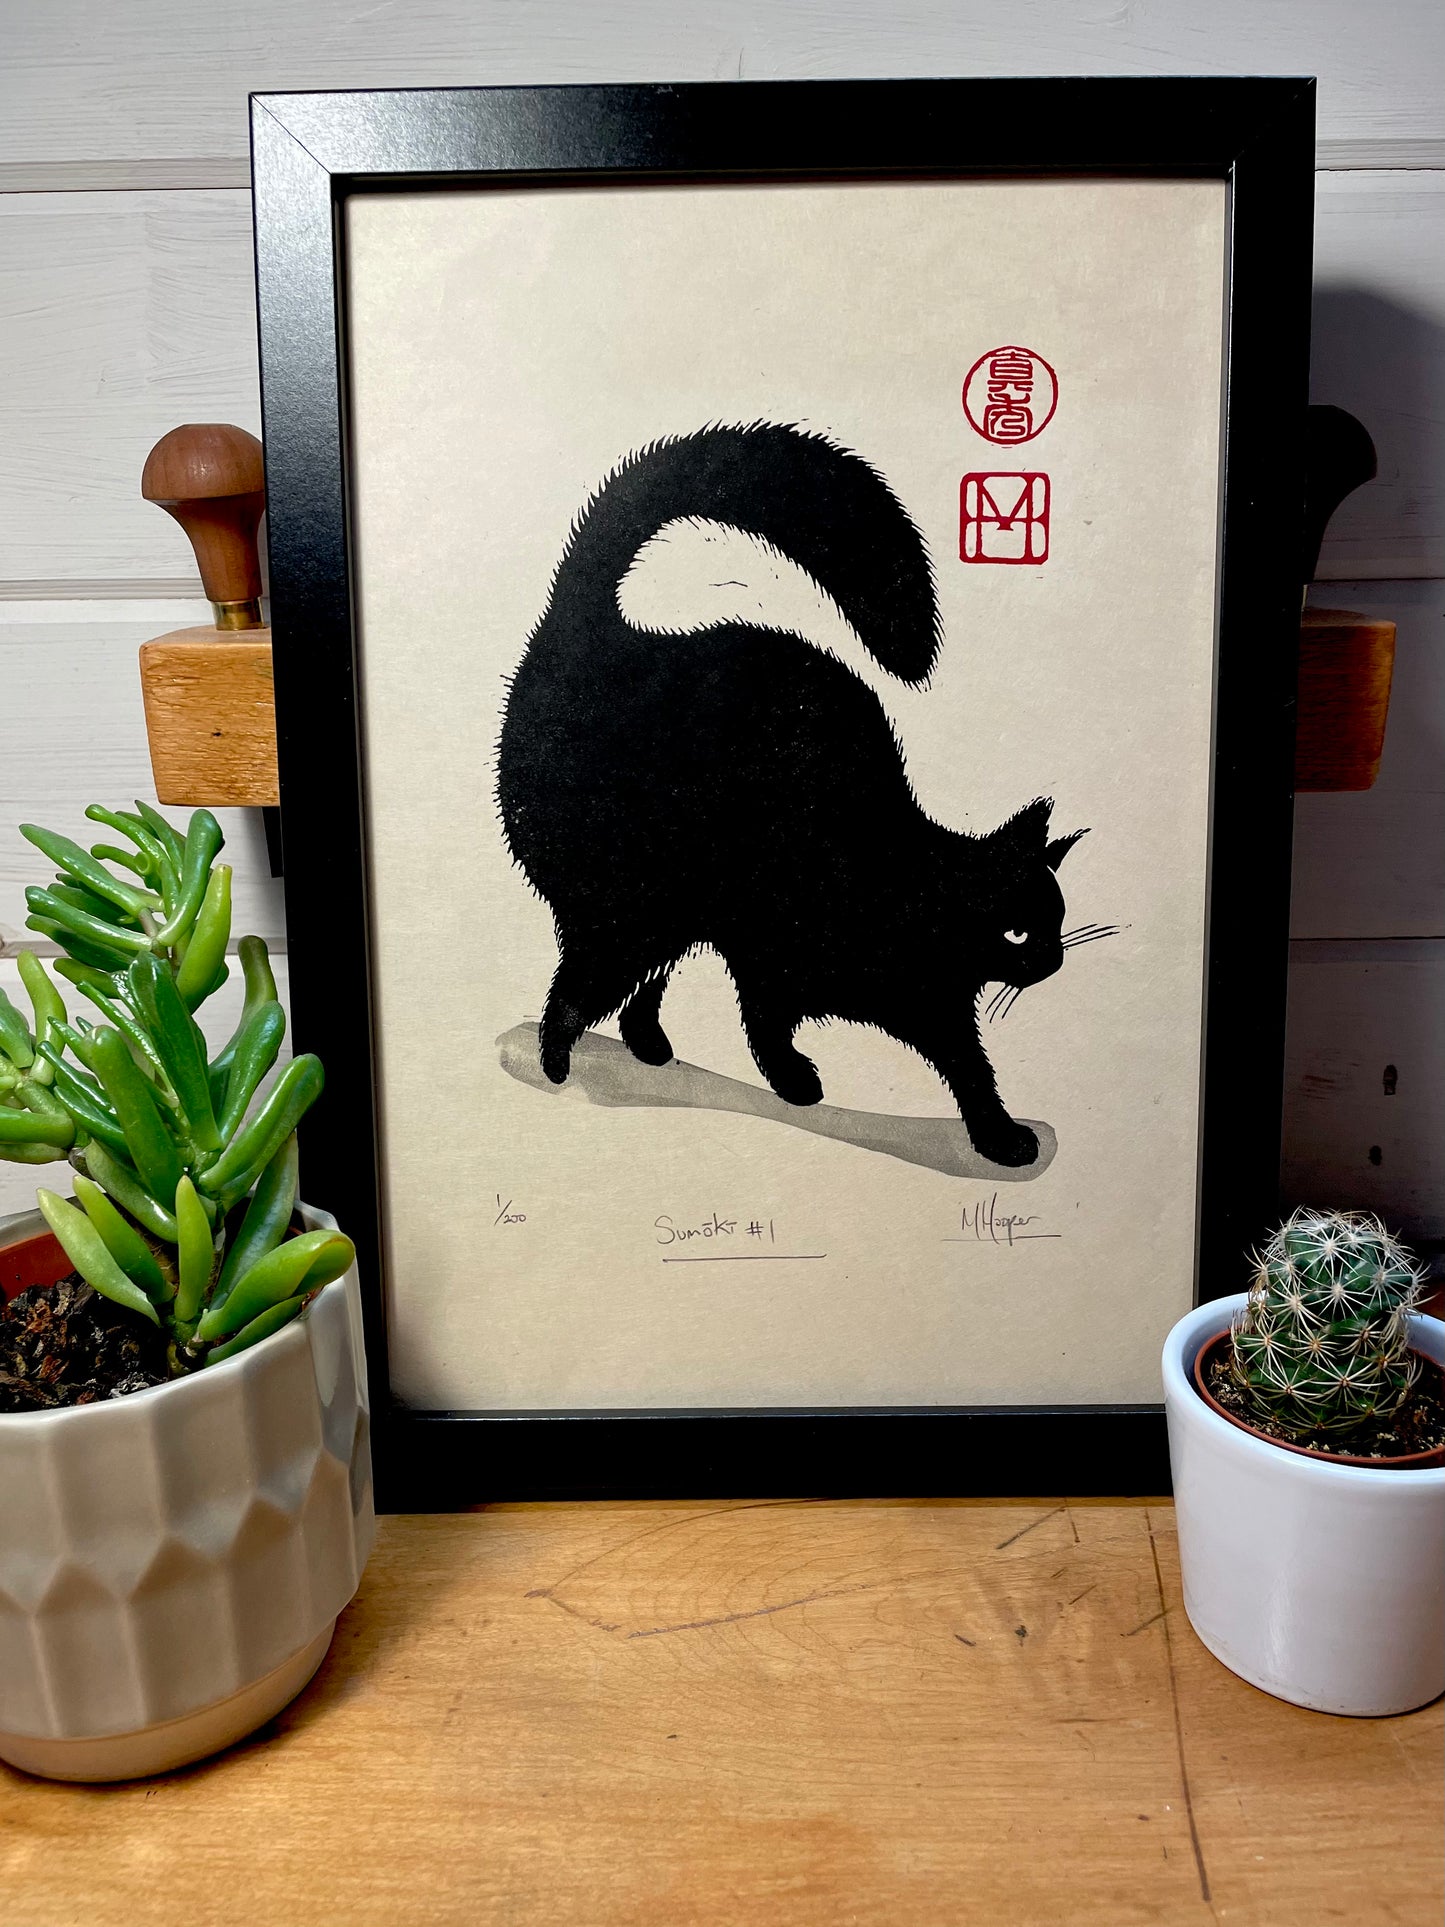 Sumōkī #1 - Japanese inspired cat linocut